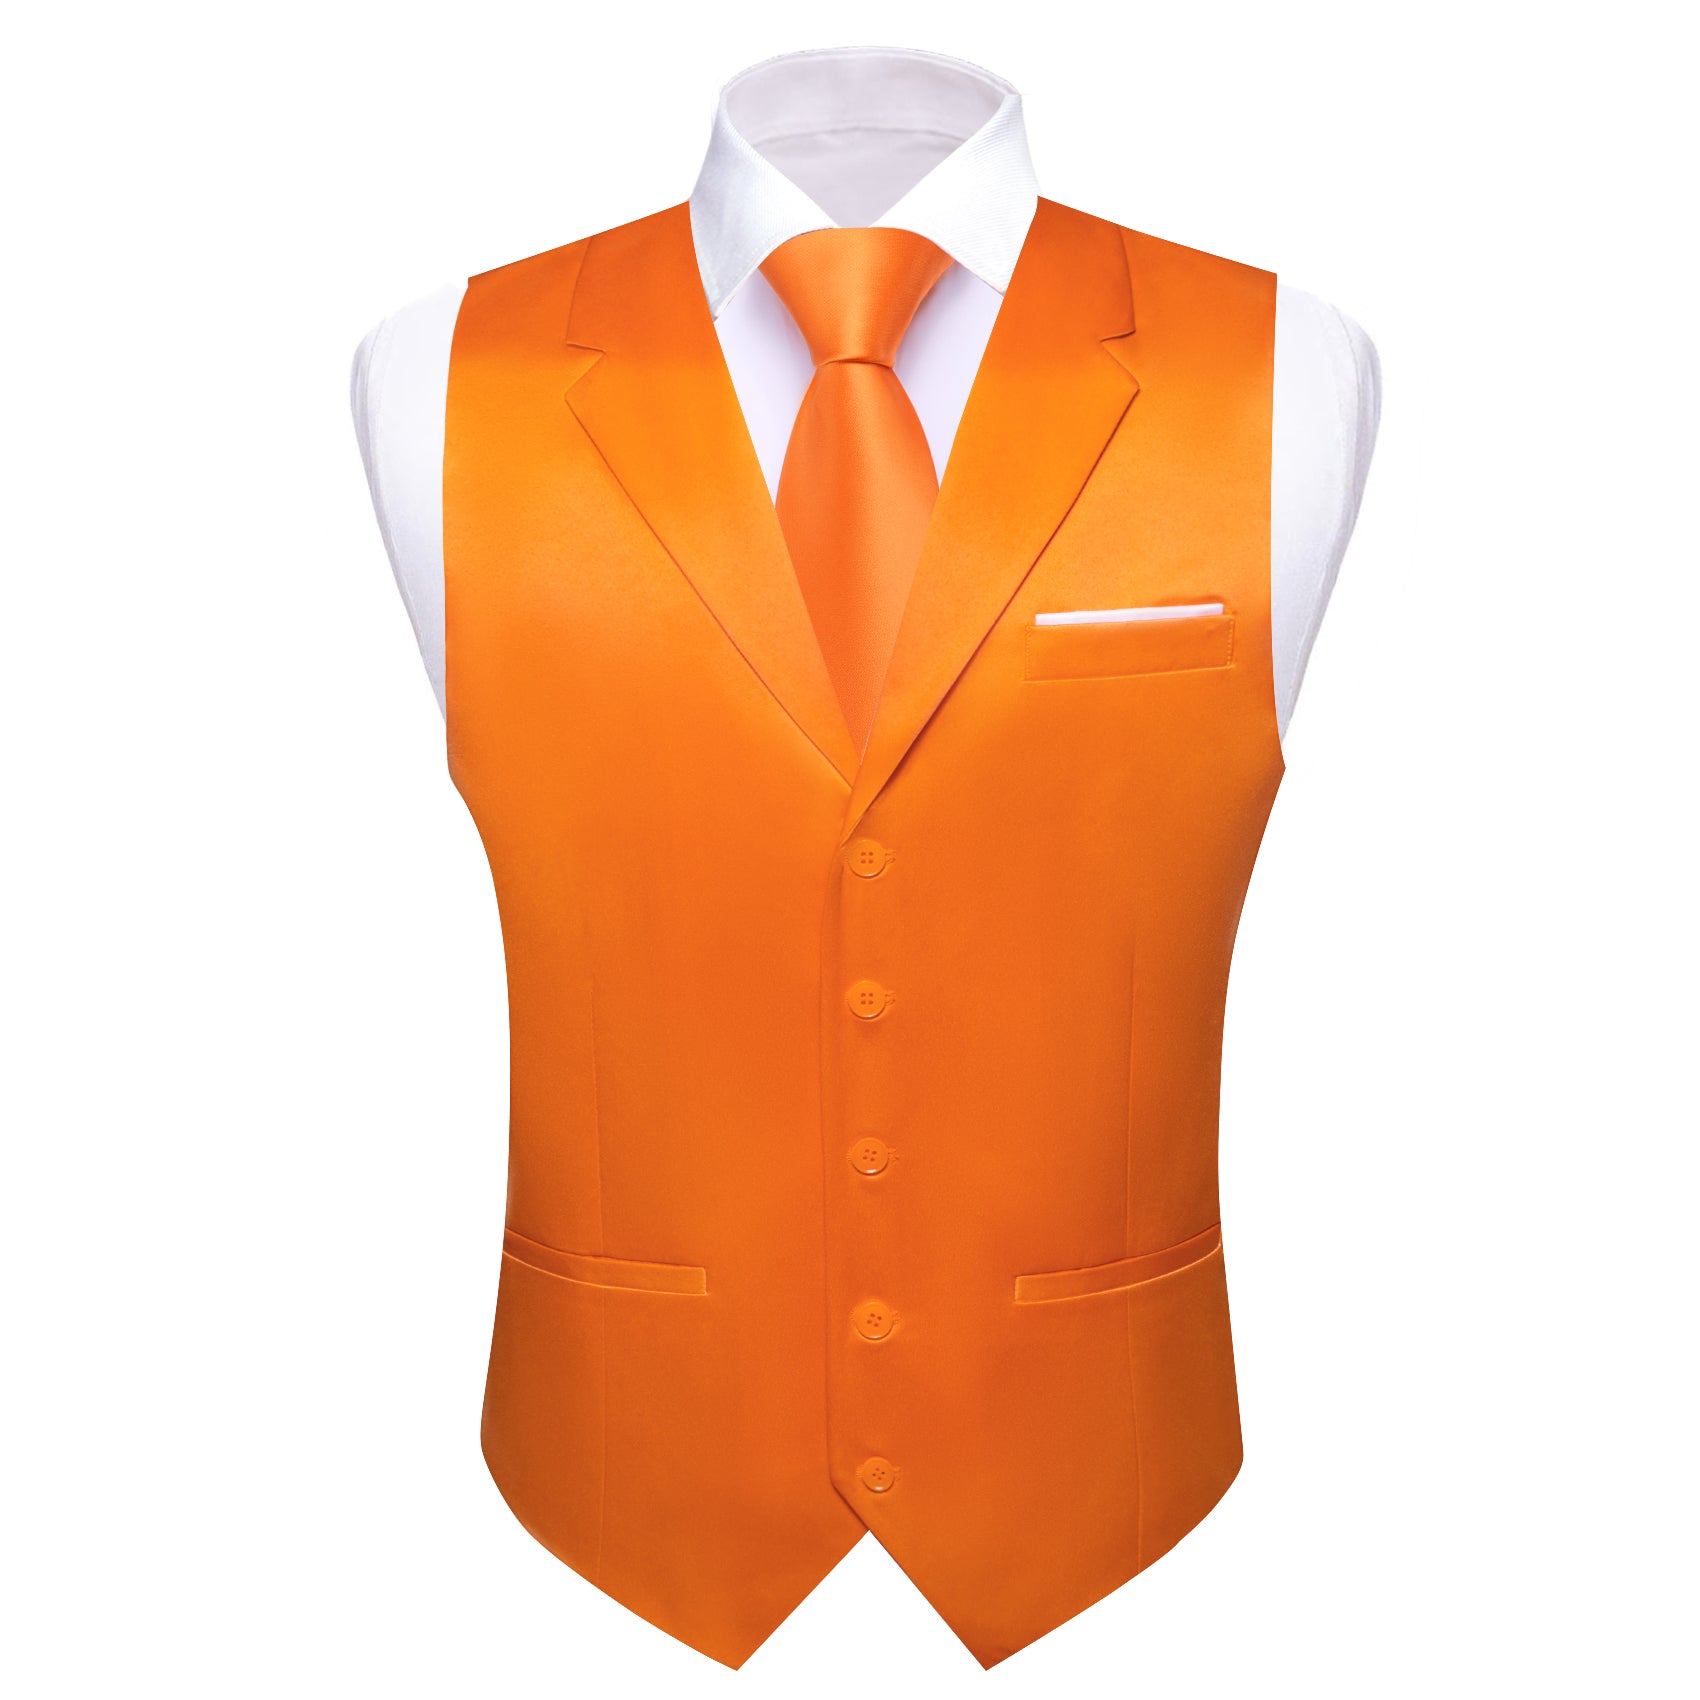 Barry.wang Orange Solid Vest Waistcoat Set